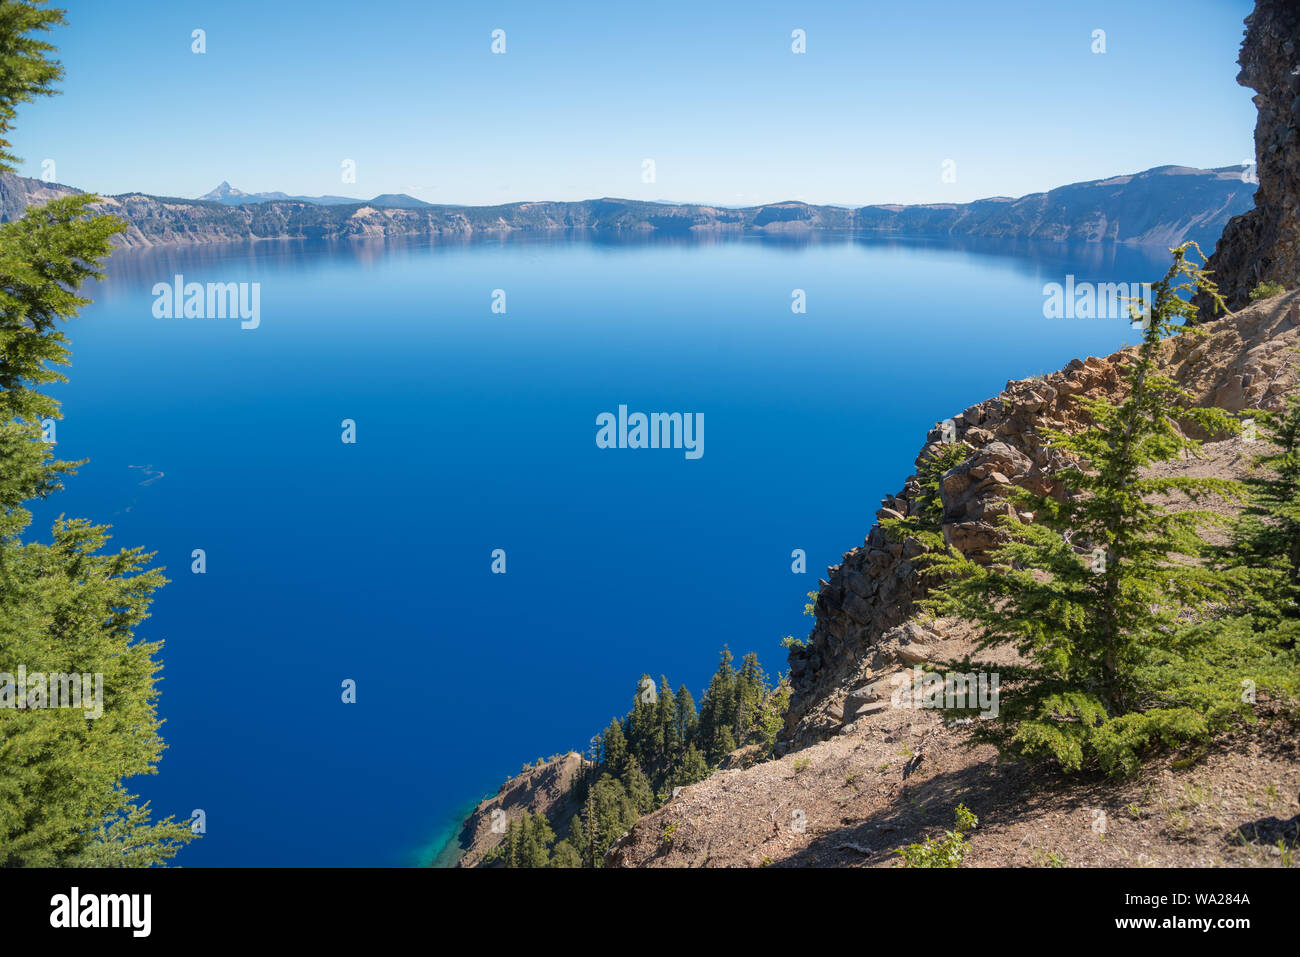 Atemberaubender Landschaftsblick auf das tiefblaue Wasser des Crater Lake National Park, Oregon Stockfoto